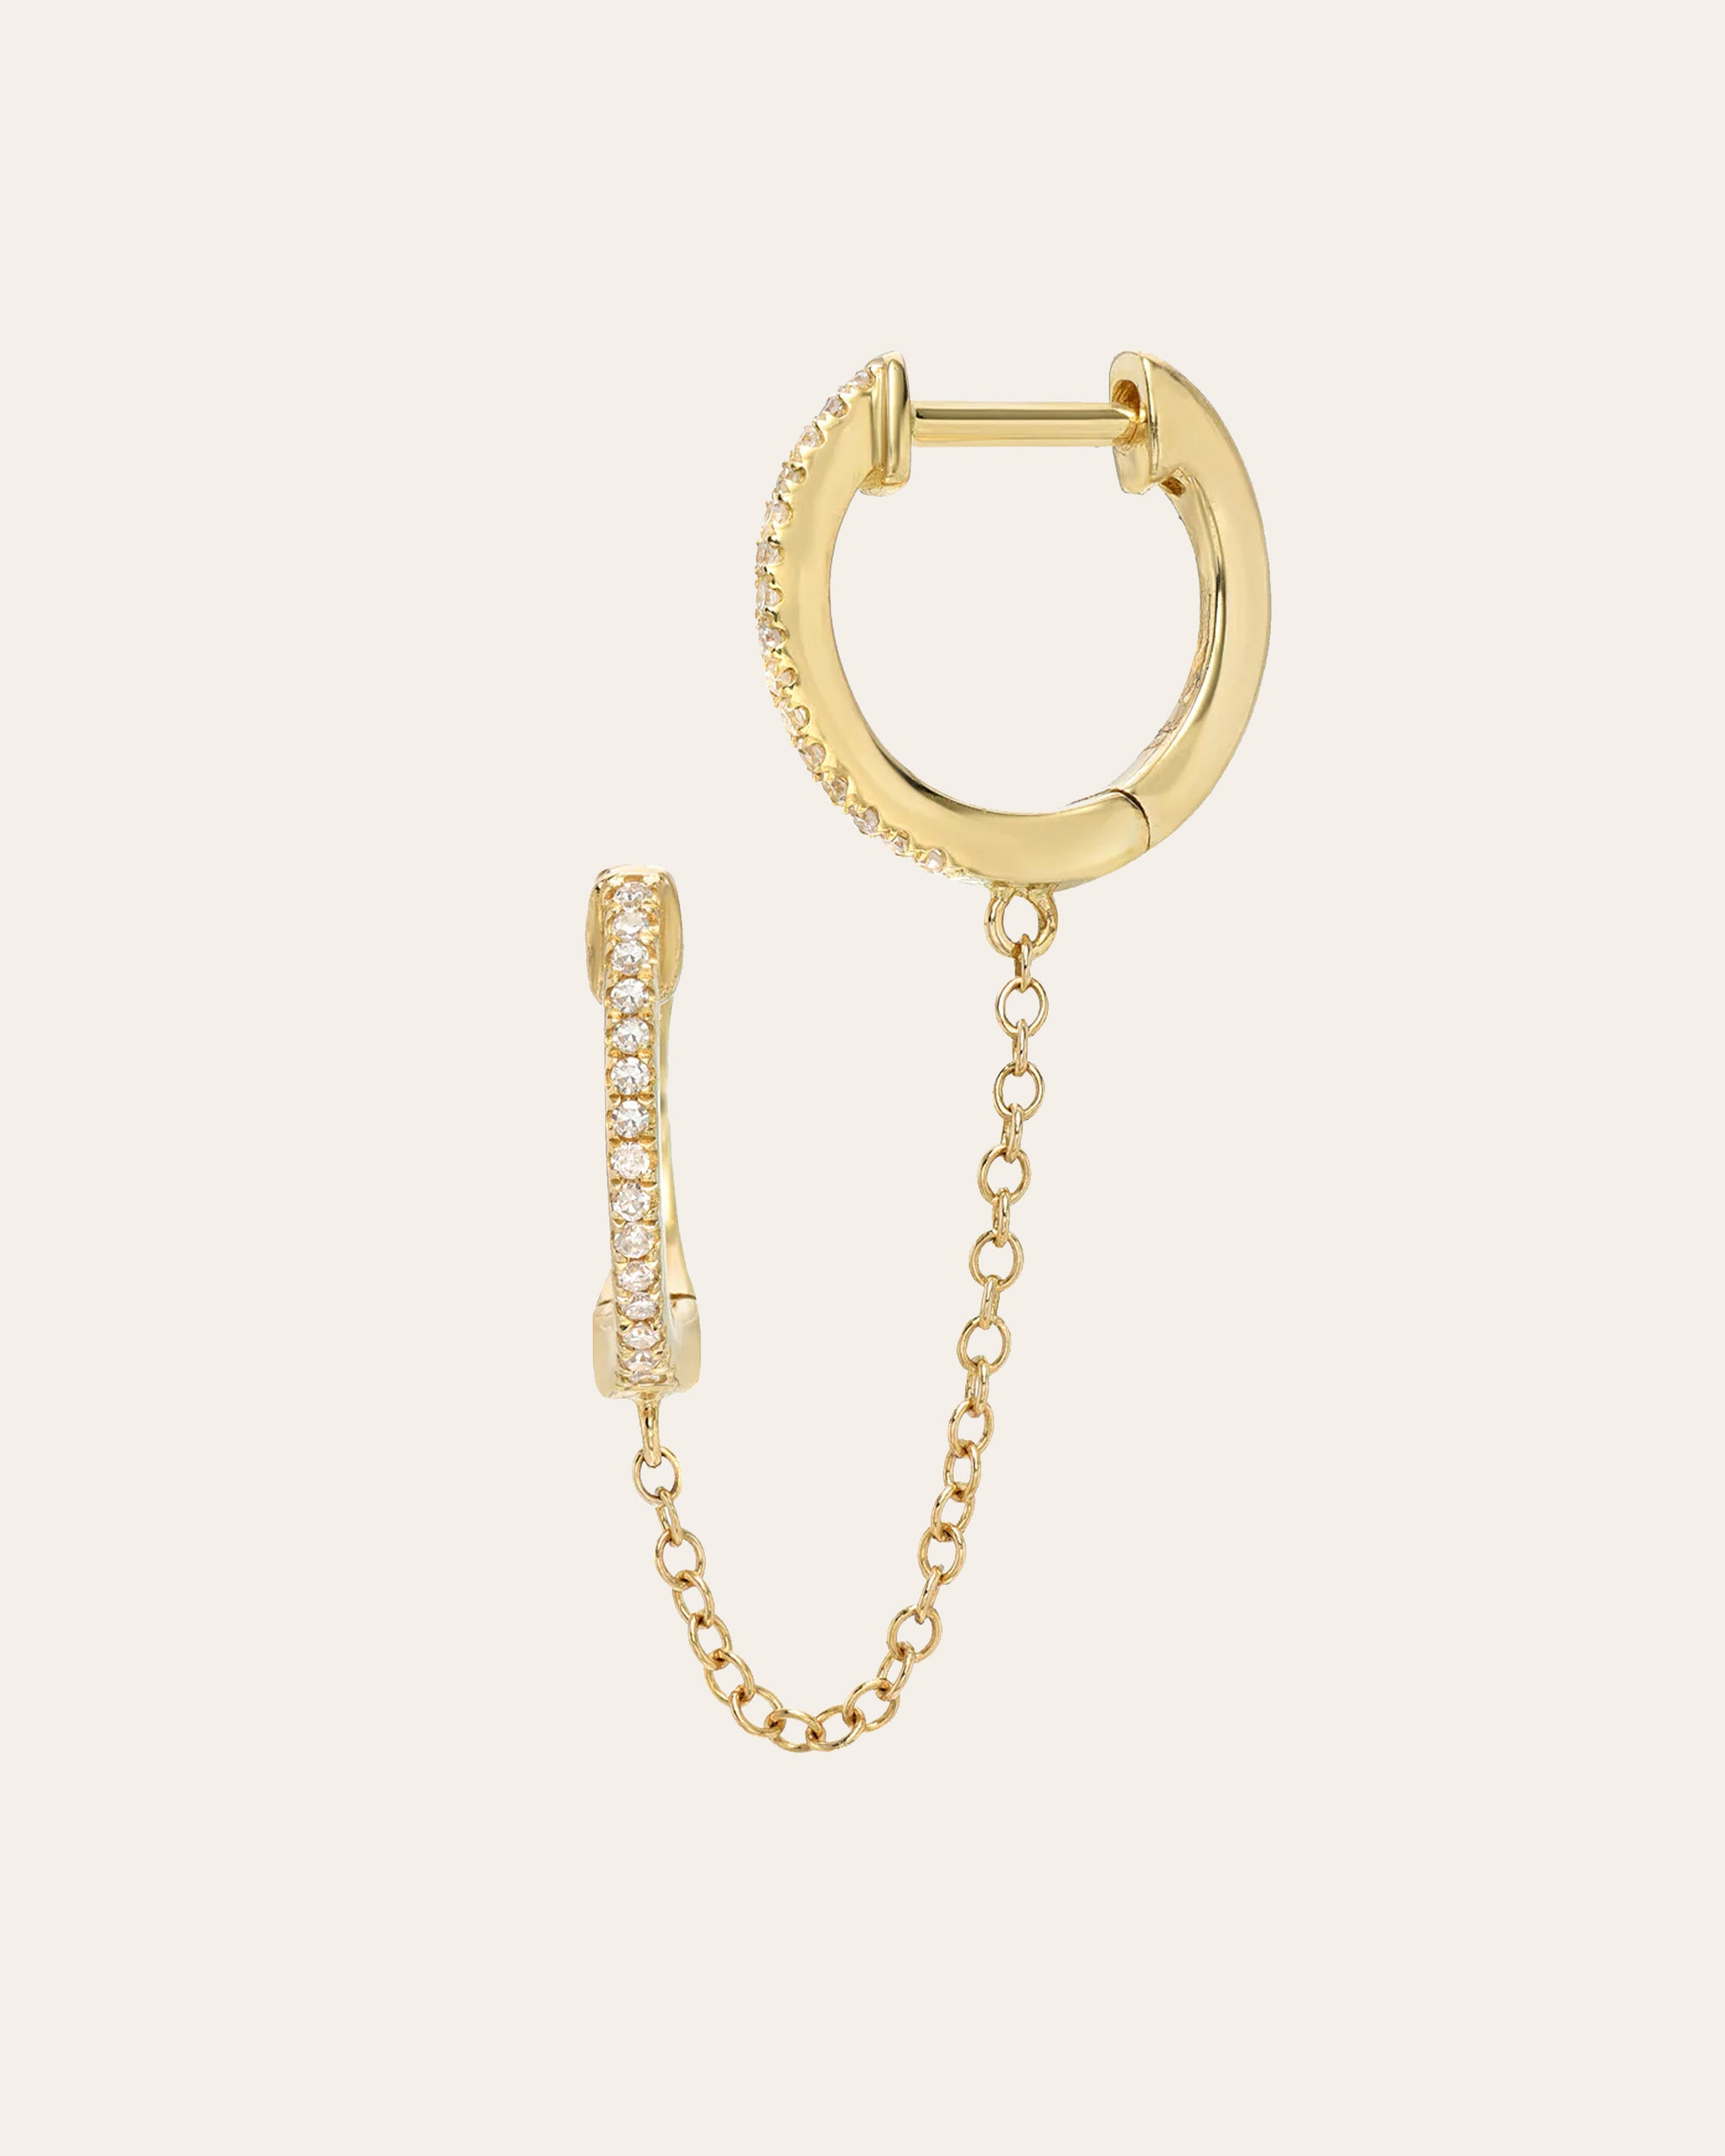 Amazon.com: SUKKCCNO 14K Gold Plated Chain Earrings Jewelry Gift for Women  Handmade Double Piercing Dangle Chain Huggie Hoop Earrings Hypoallergenic  Everyday Earrings : Clothing, Shoes & Jewelry